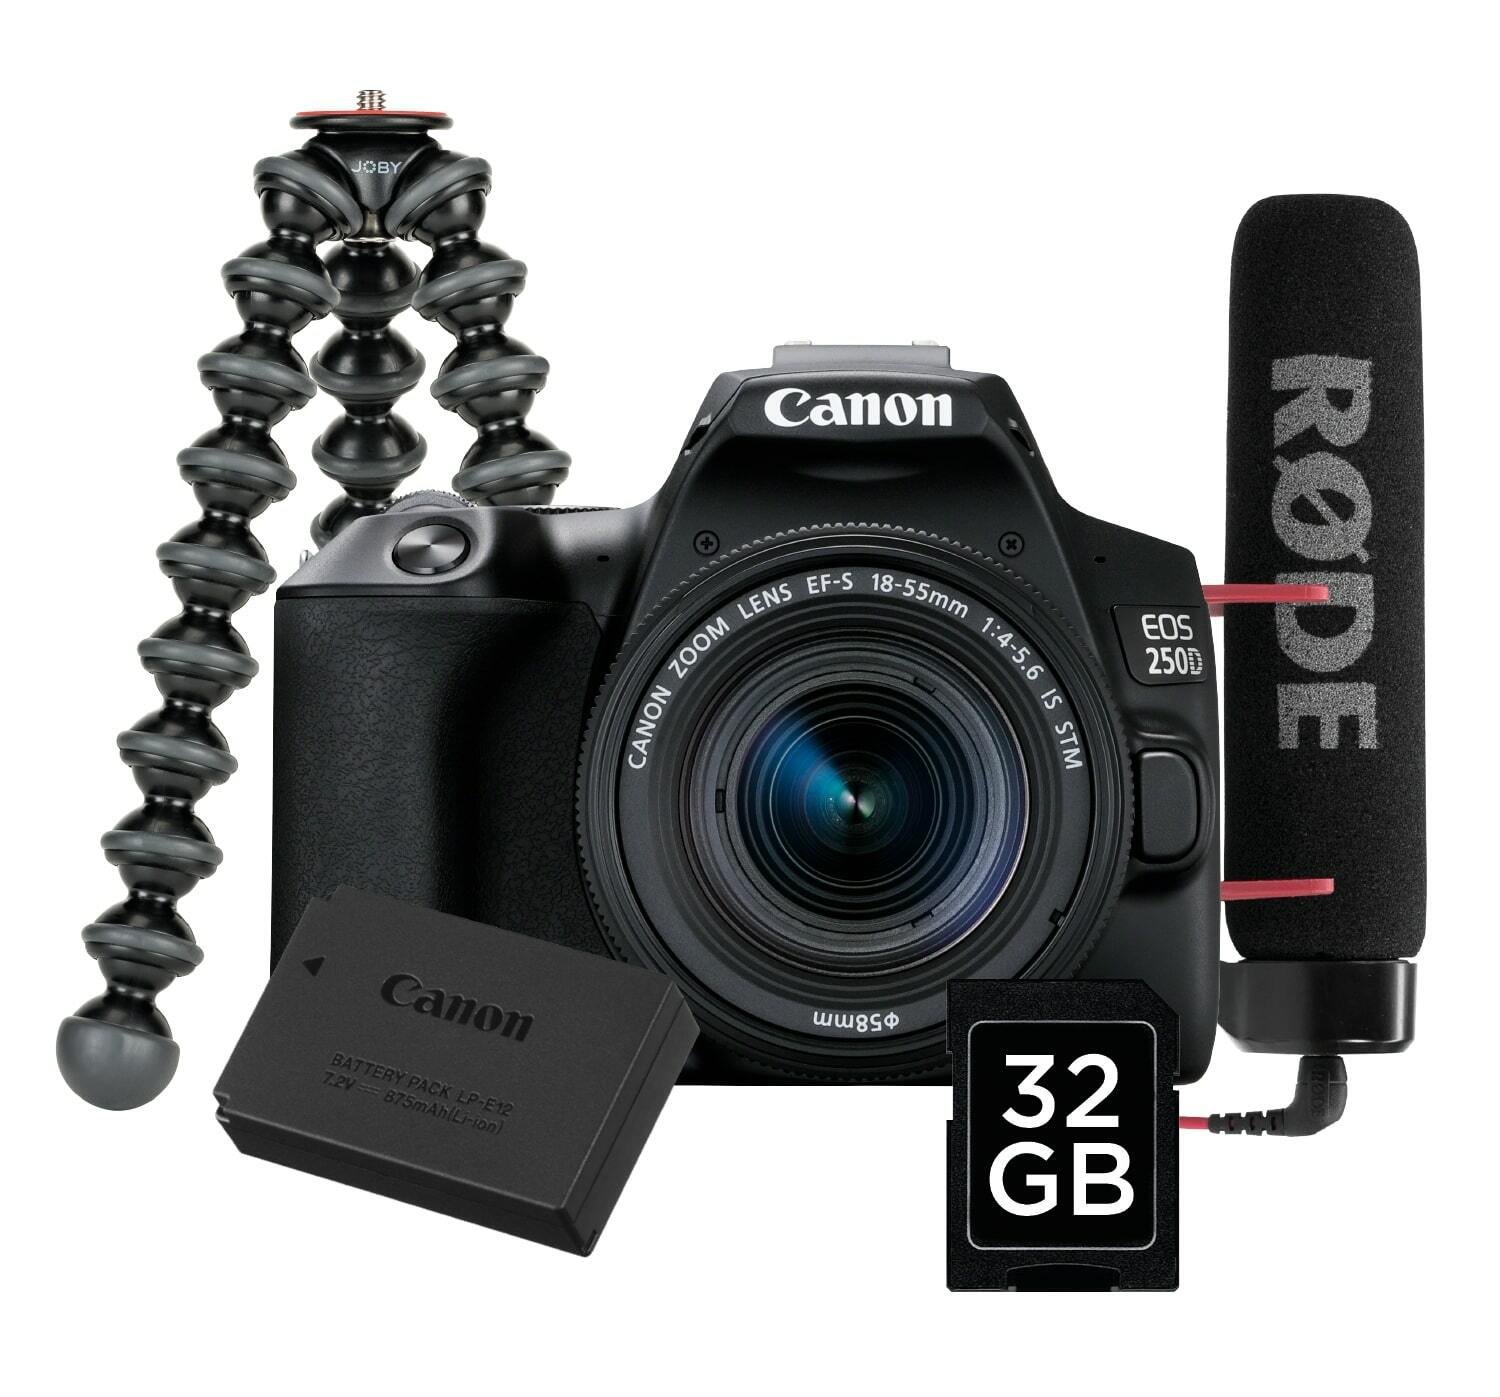 Canon EOS 250D Vlogger Kit Review